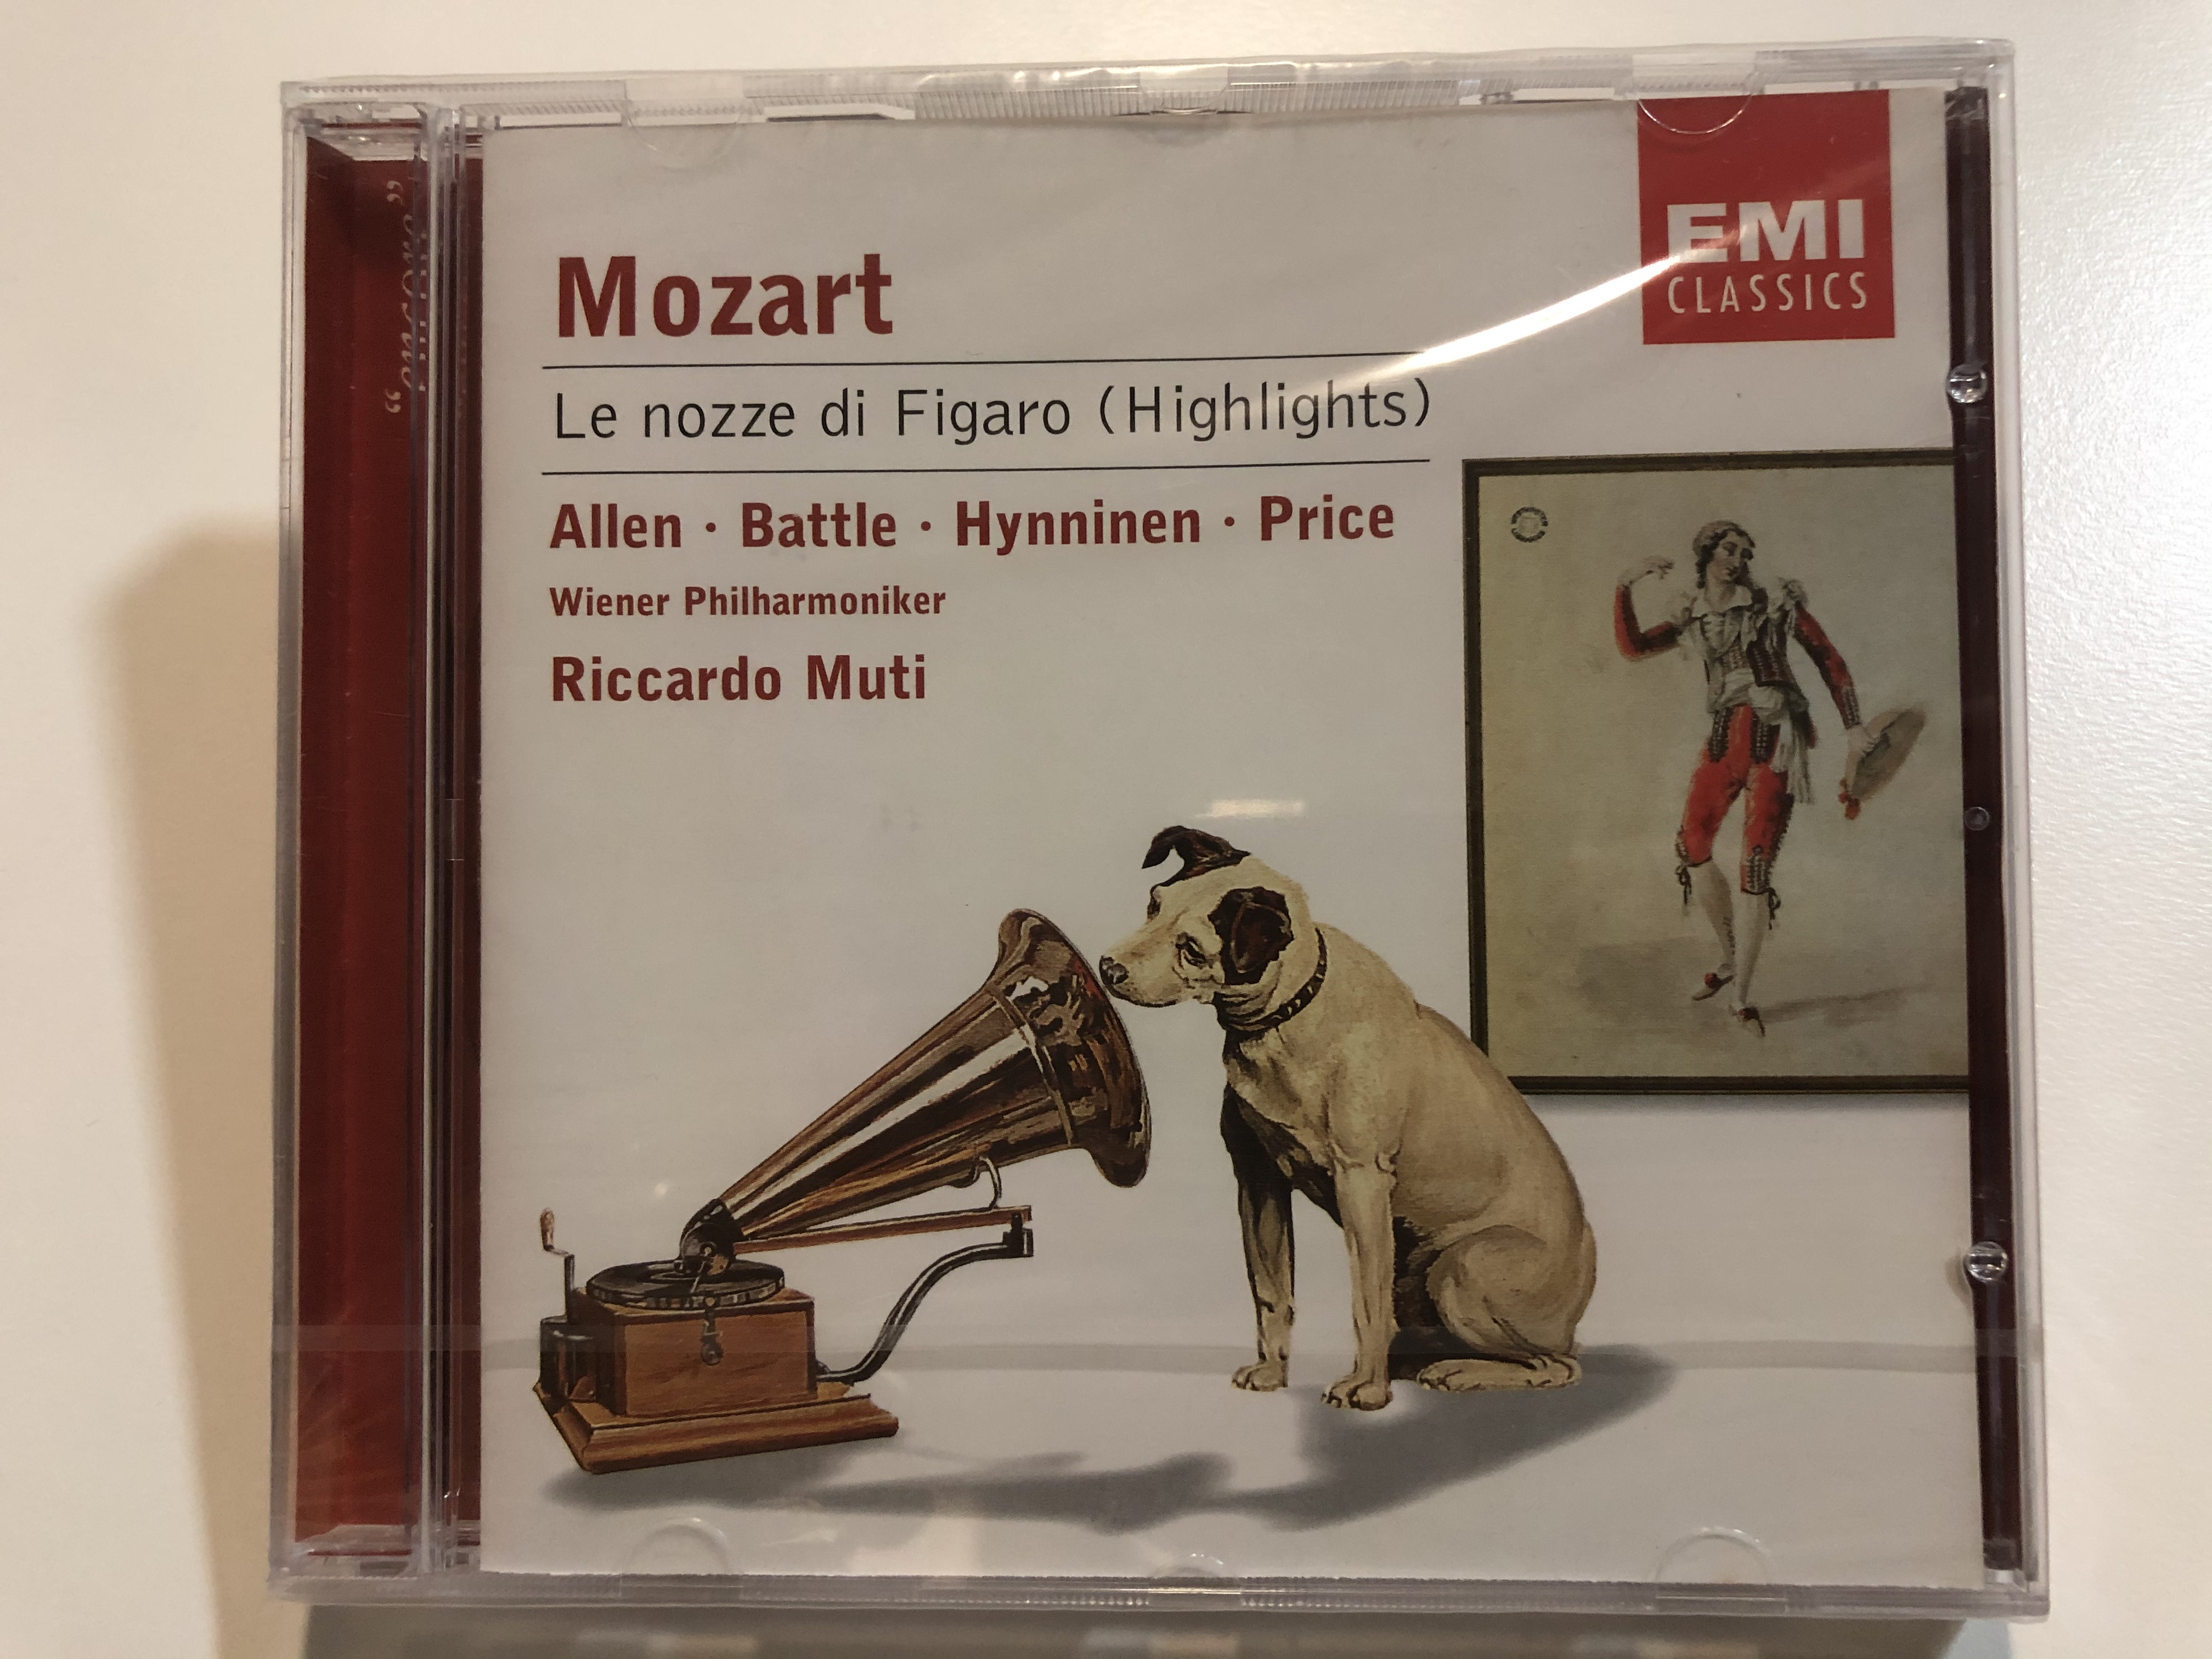 mozart-le-nozze-di-figaro-highlights-allen-battle-hynninen-price-wiener-philharmoniker-riccardo-muti-emi-classics-audio-cd-2001-stereo-724357457927-1-.jpg